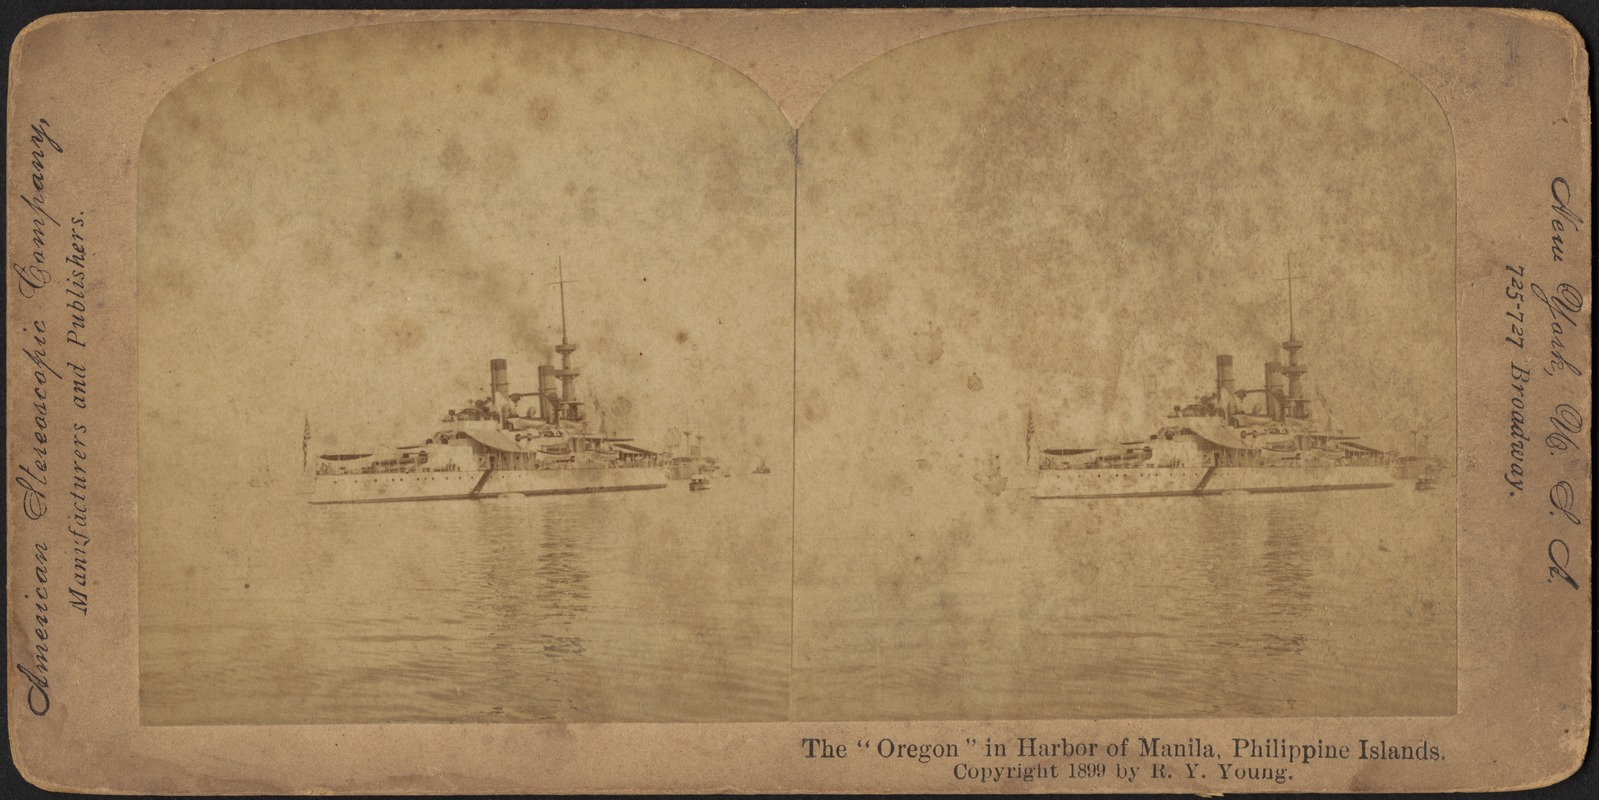 The "Oregon" in harbor of Manila. Philippine Islands